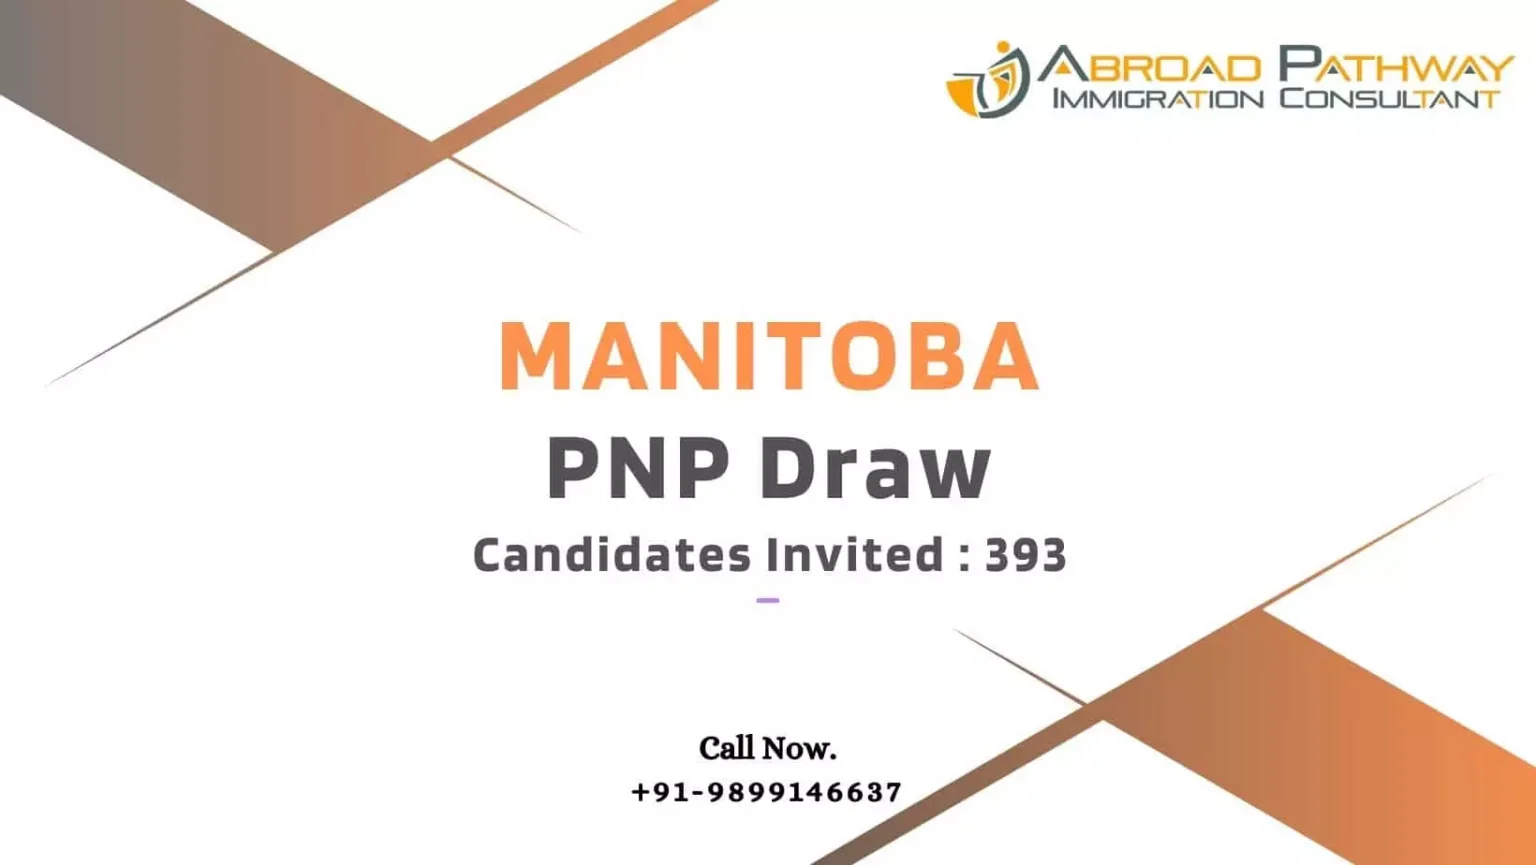 Manitoba PNP Draw invites 393 immigrants